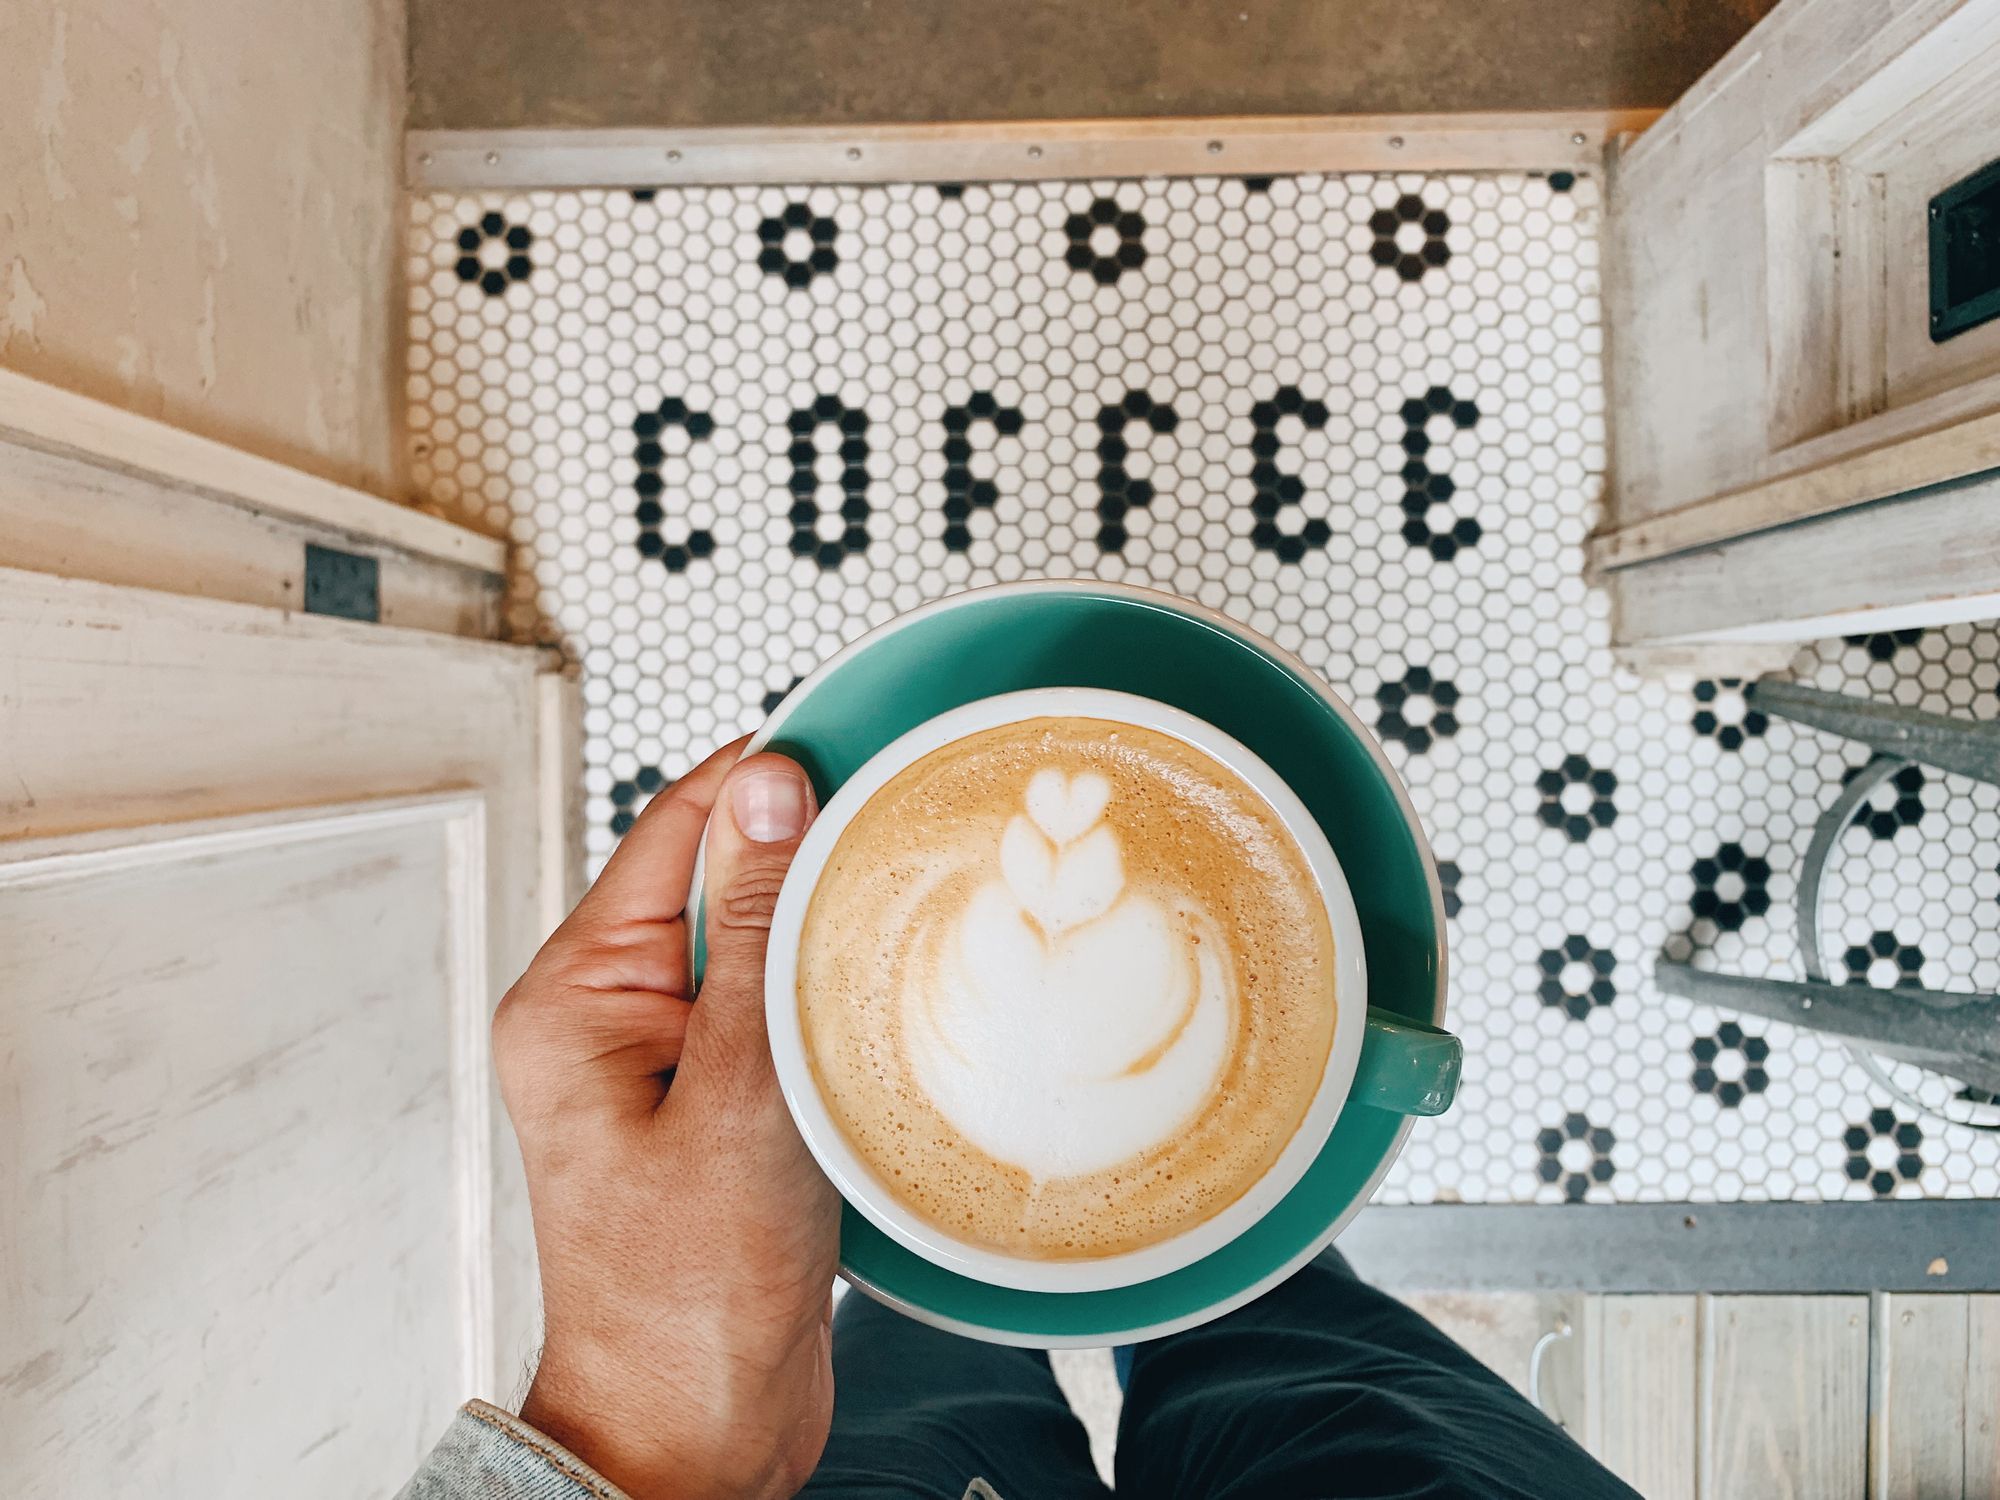 Cute Coffee Mugs That'll Make You Feel Like You're At A Fancy Cafe